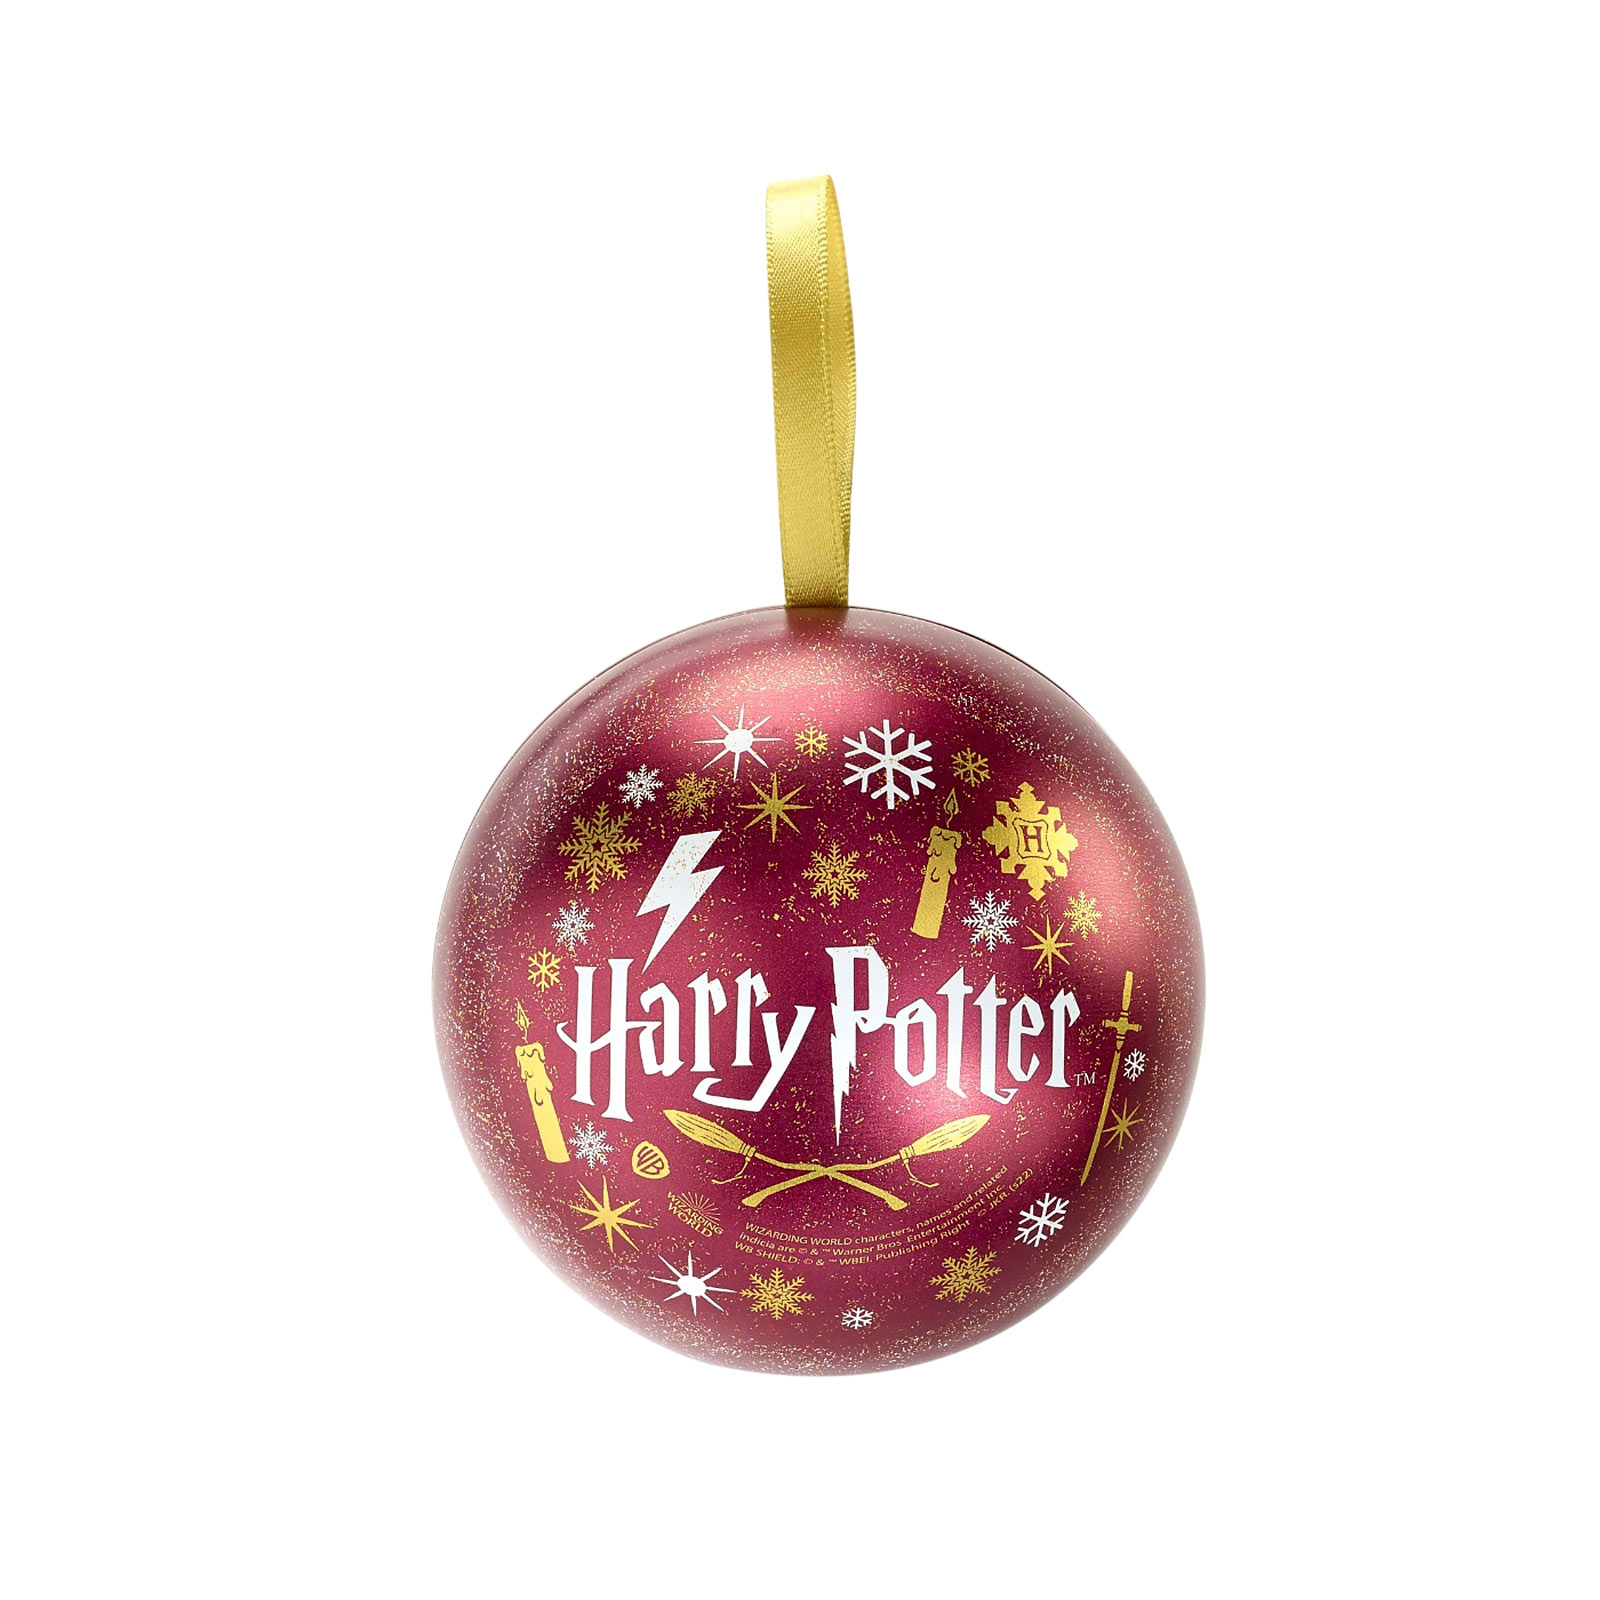 Harry Potter - Weihnachtskugel mit Fawkes Kette